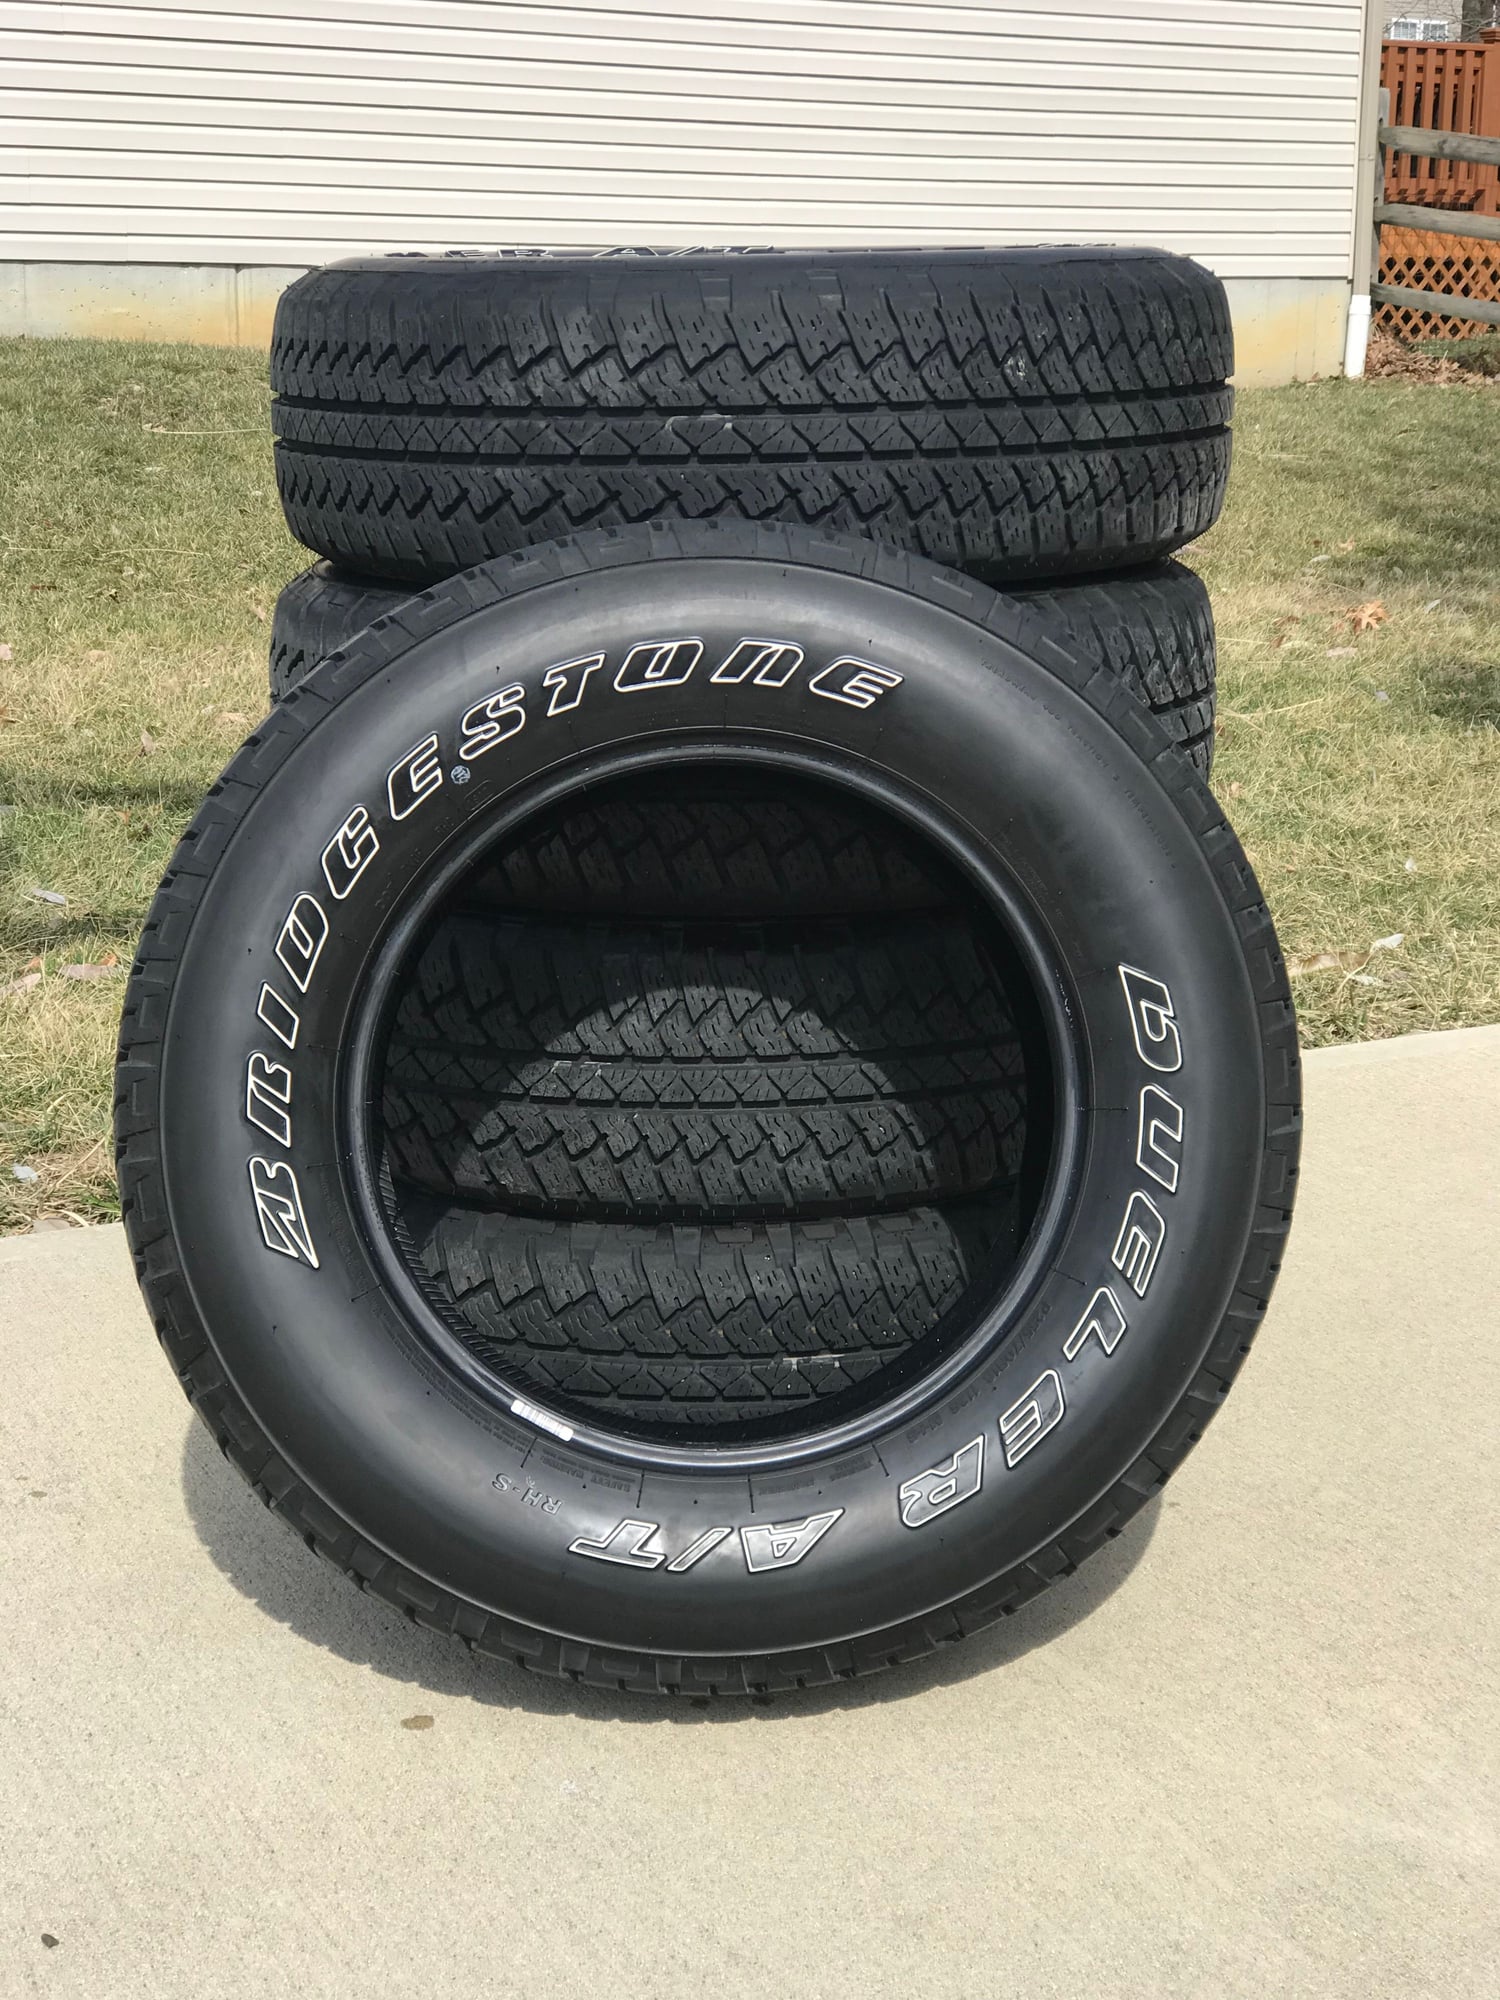 Wheels and Tires/Axles - Bridgestone Dueler A/T RH-S 255/70r18 Qty: 5 - Used - Cincinnati, OH 45150, United States